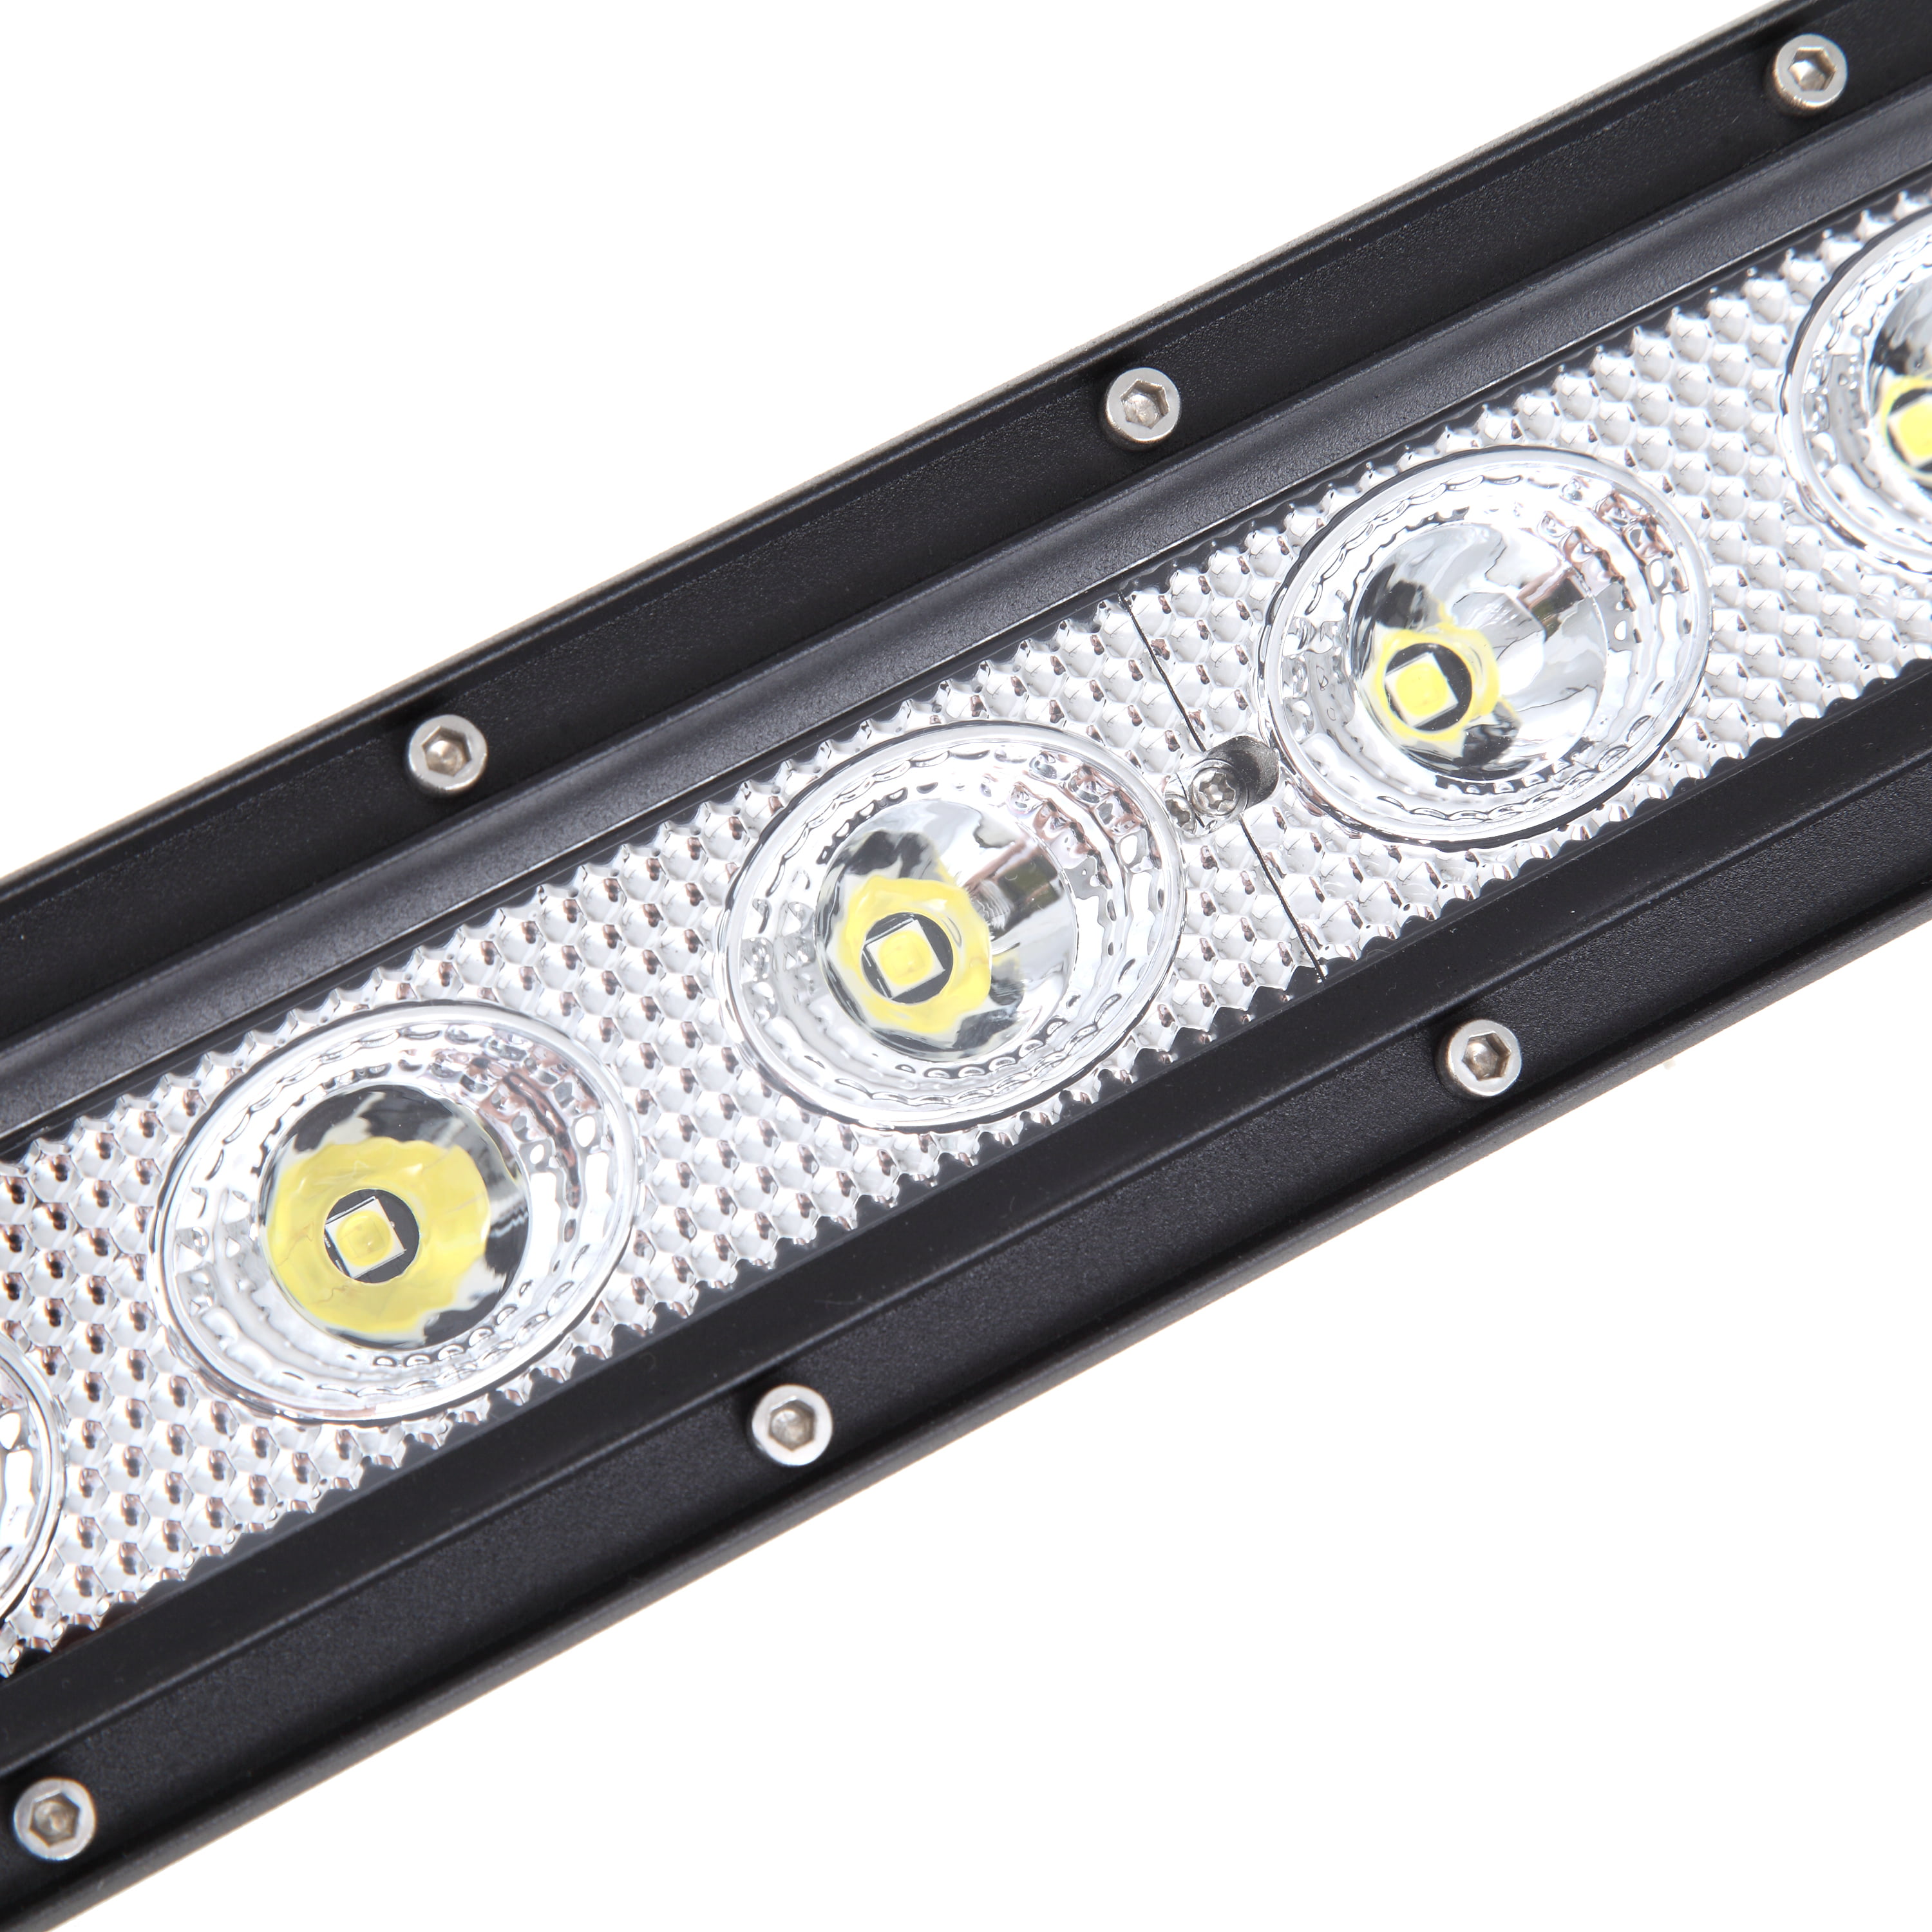 Autodrive LED Combo Light Bar and Brackets (9) 